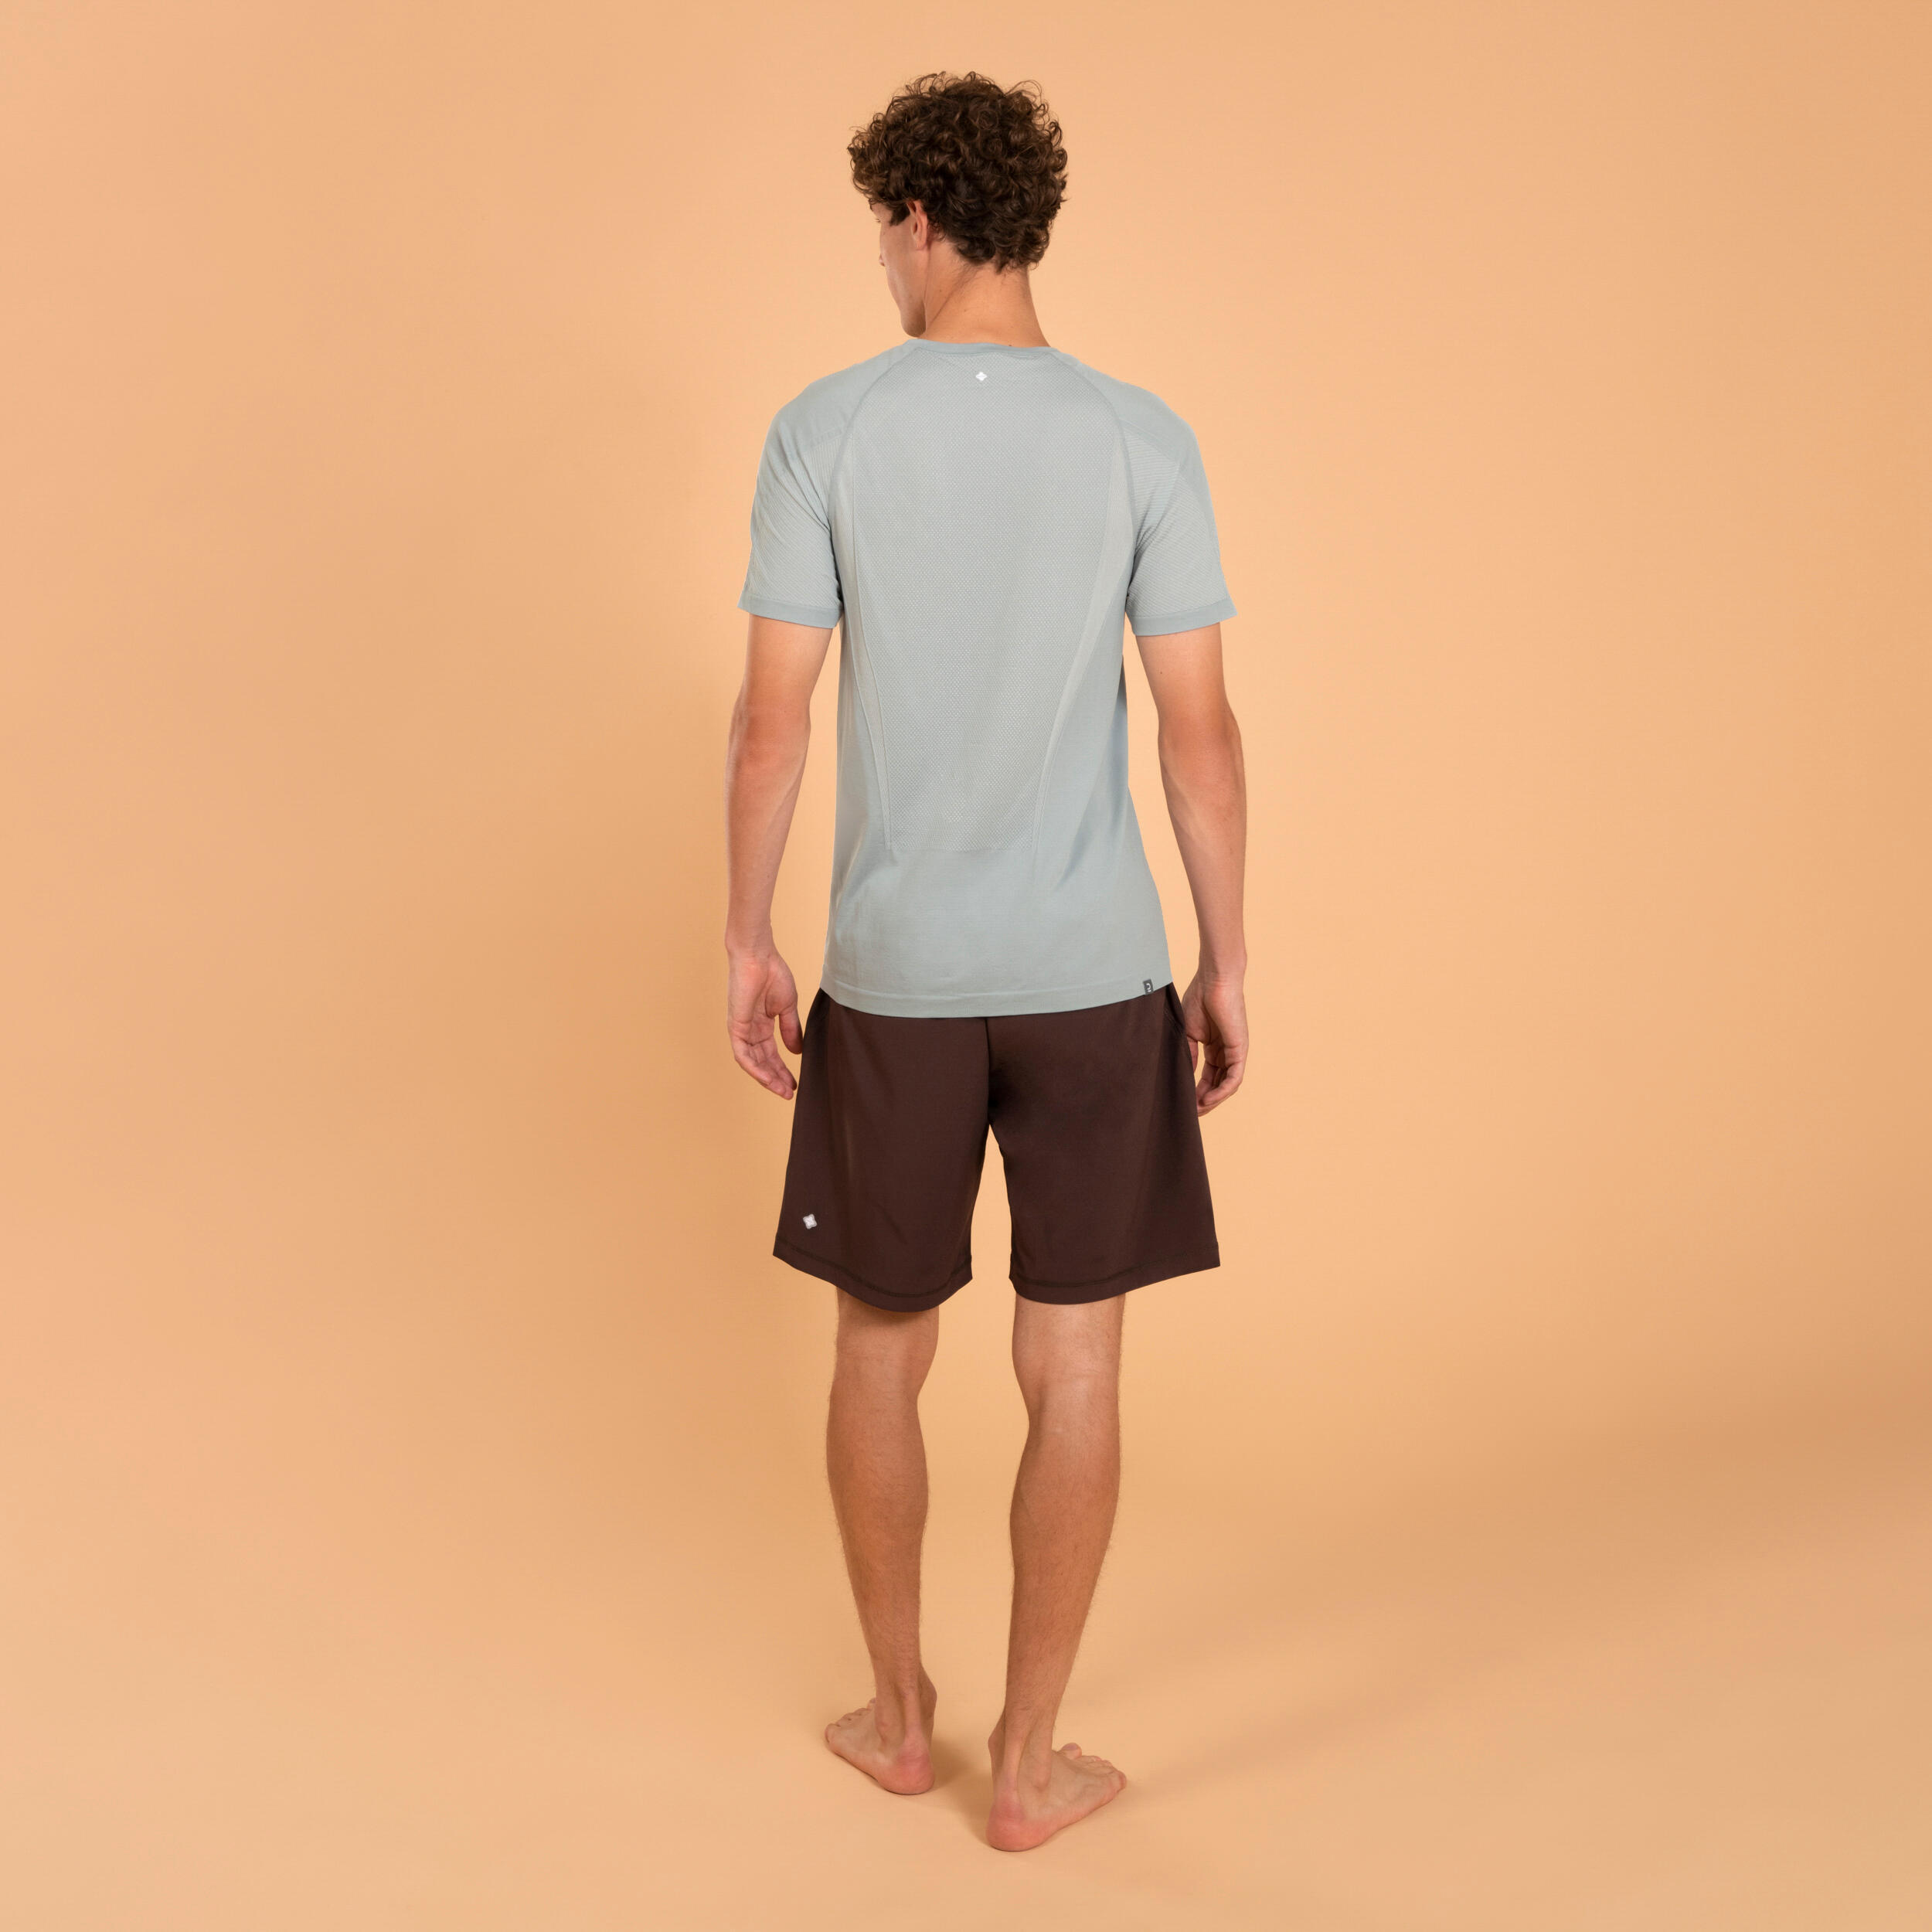 Men's Seamless Yoga T-Shirt Second Skin - Light Grey 4/4